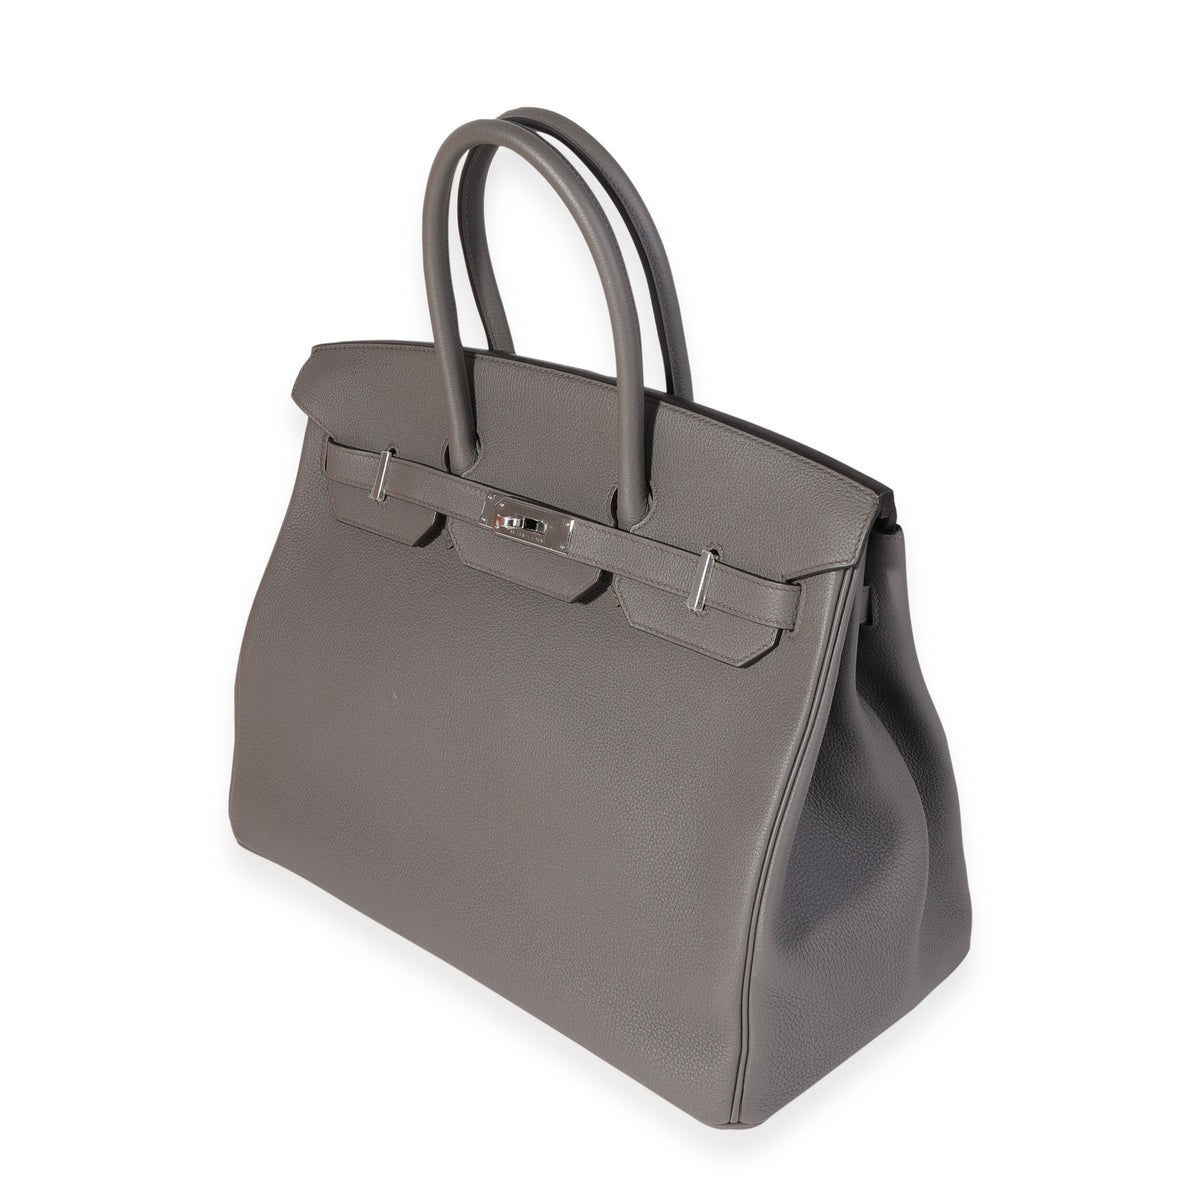 Hermes Birkin 35 Gris Etain Togo Leather PHW Handbag